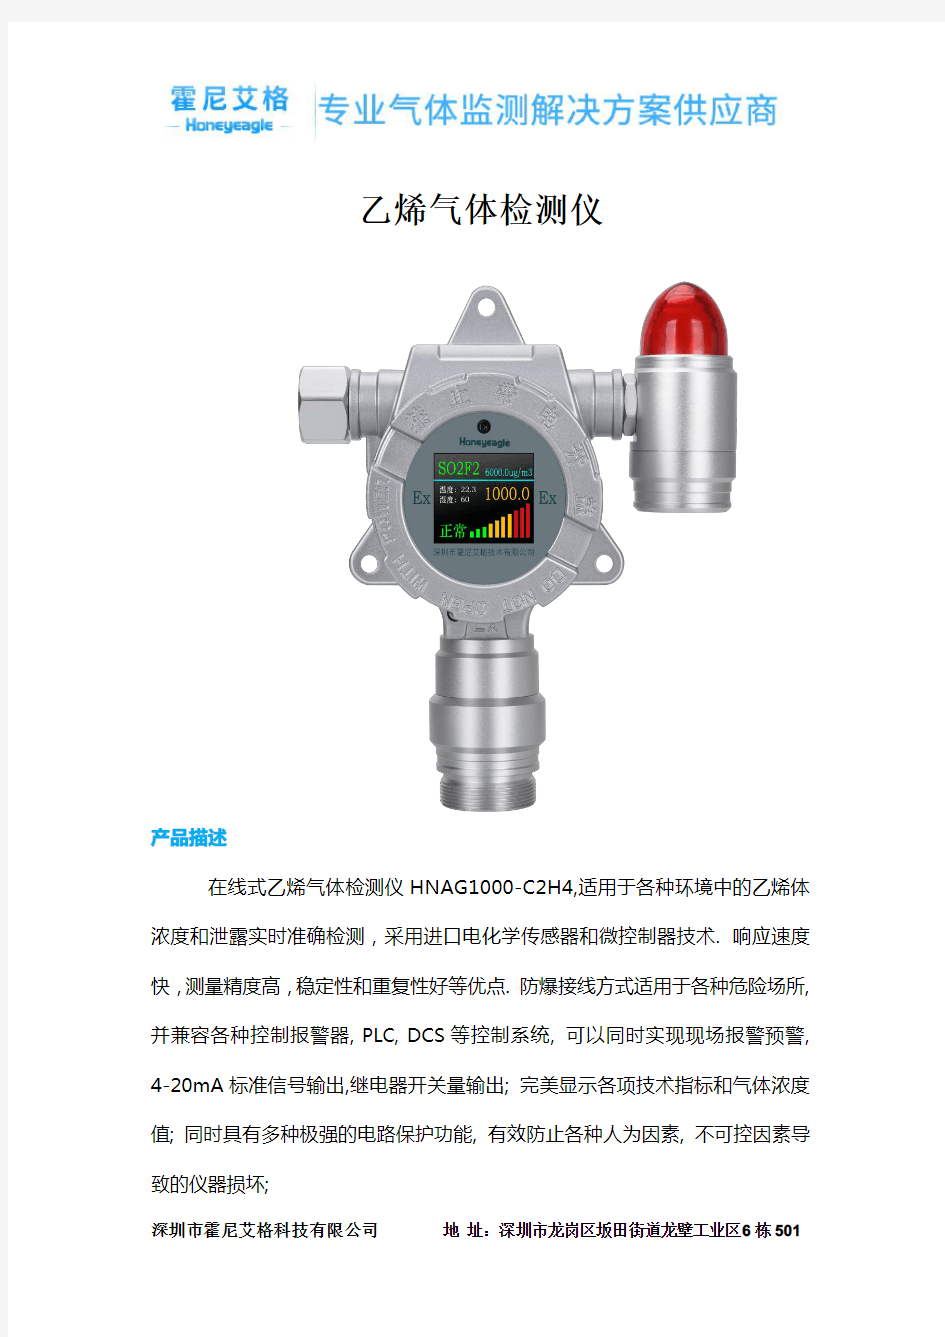 HNAG-C2H4乙烯气体检测仪